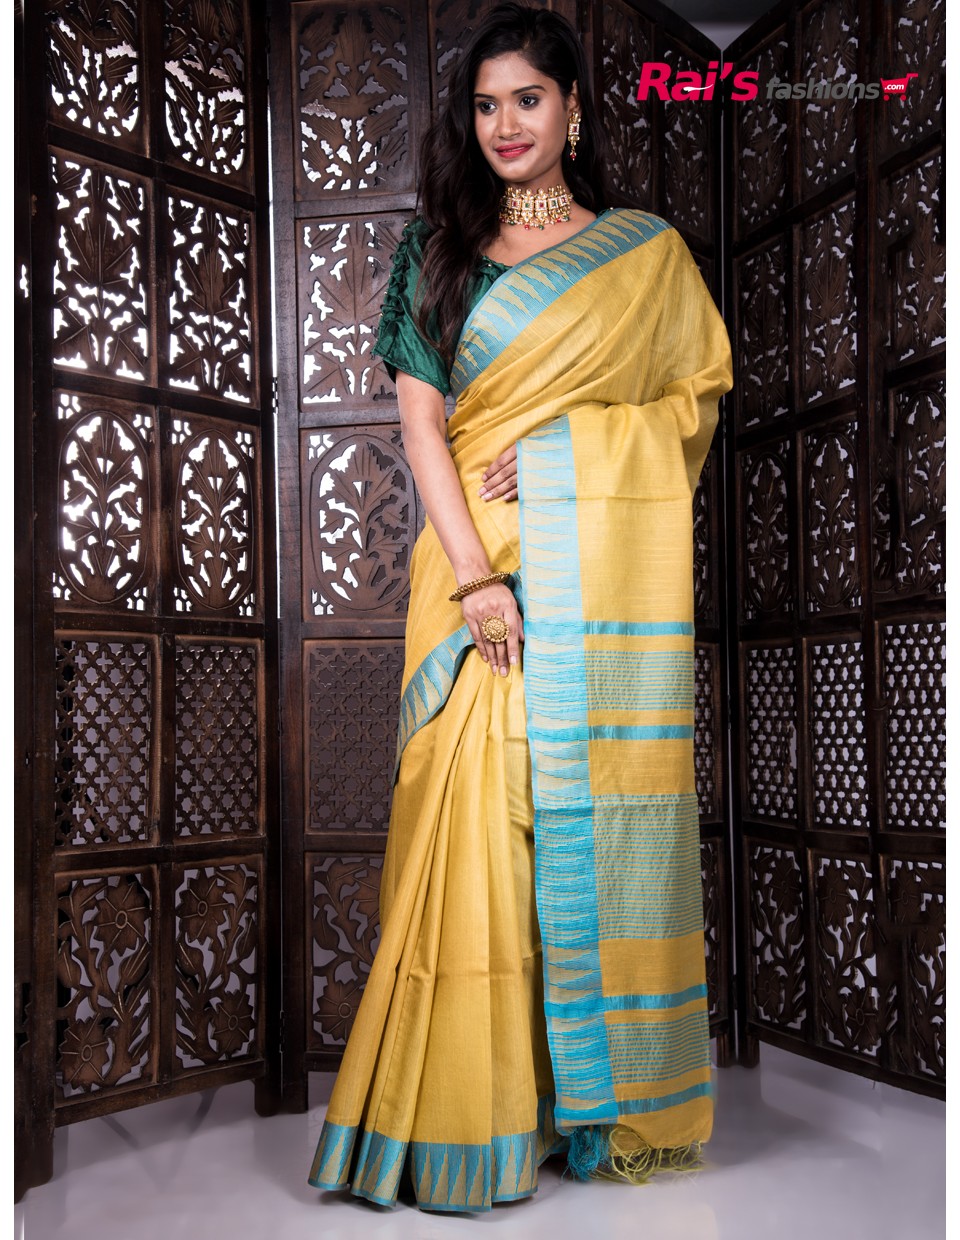 Handloom Soft Silk With Contrast Color Fine Weaving Temple Patten Border (AP21A57)